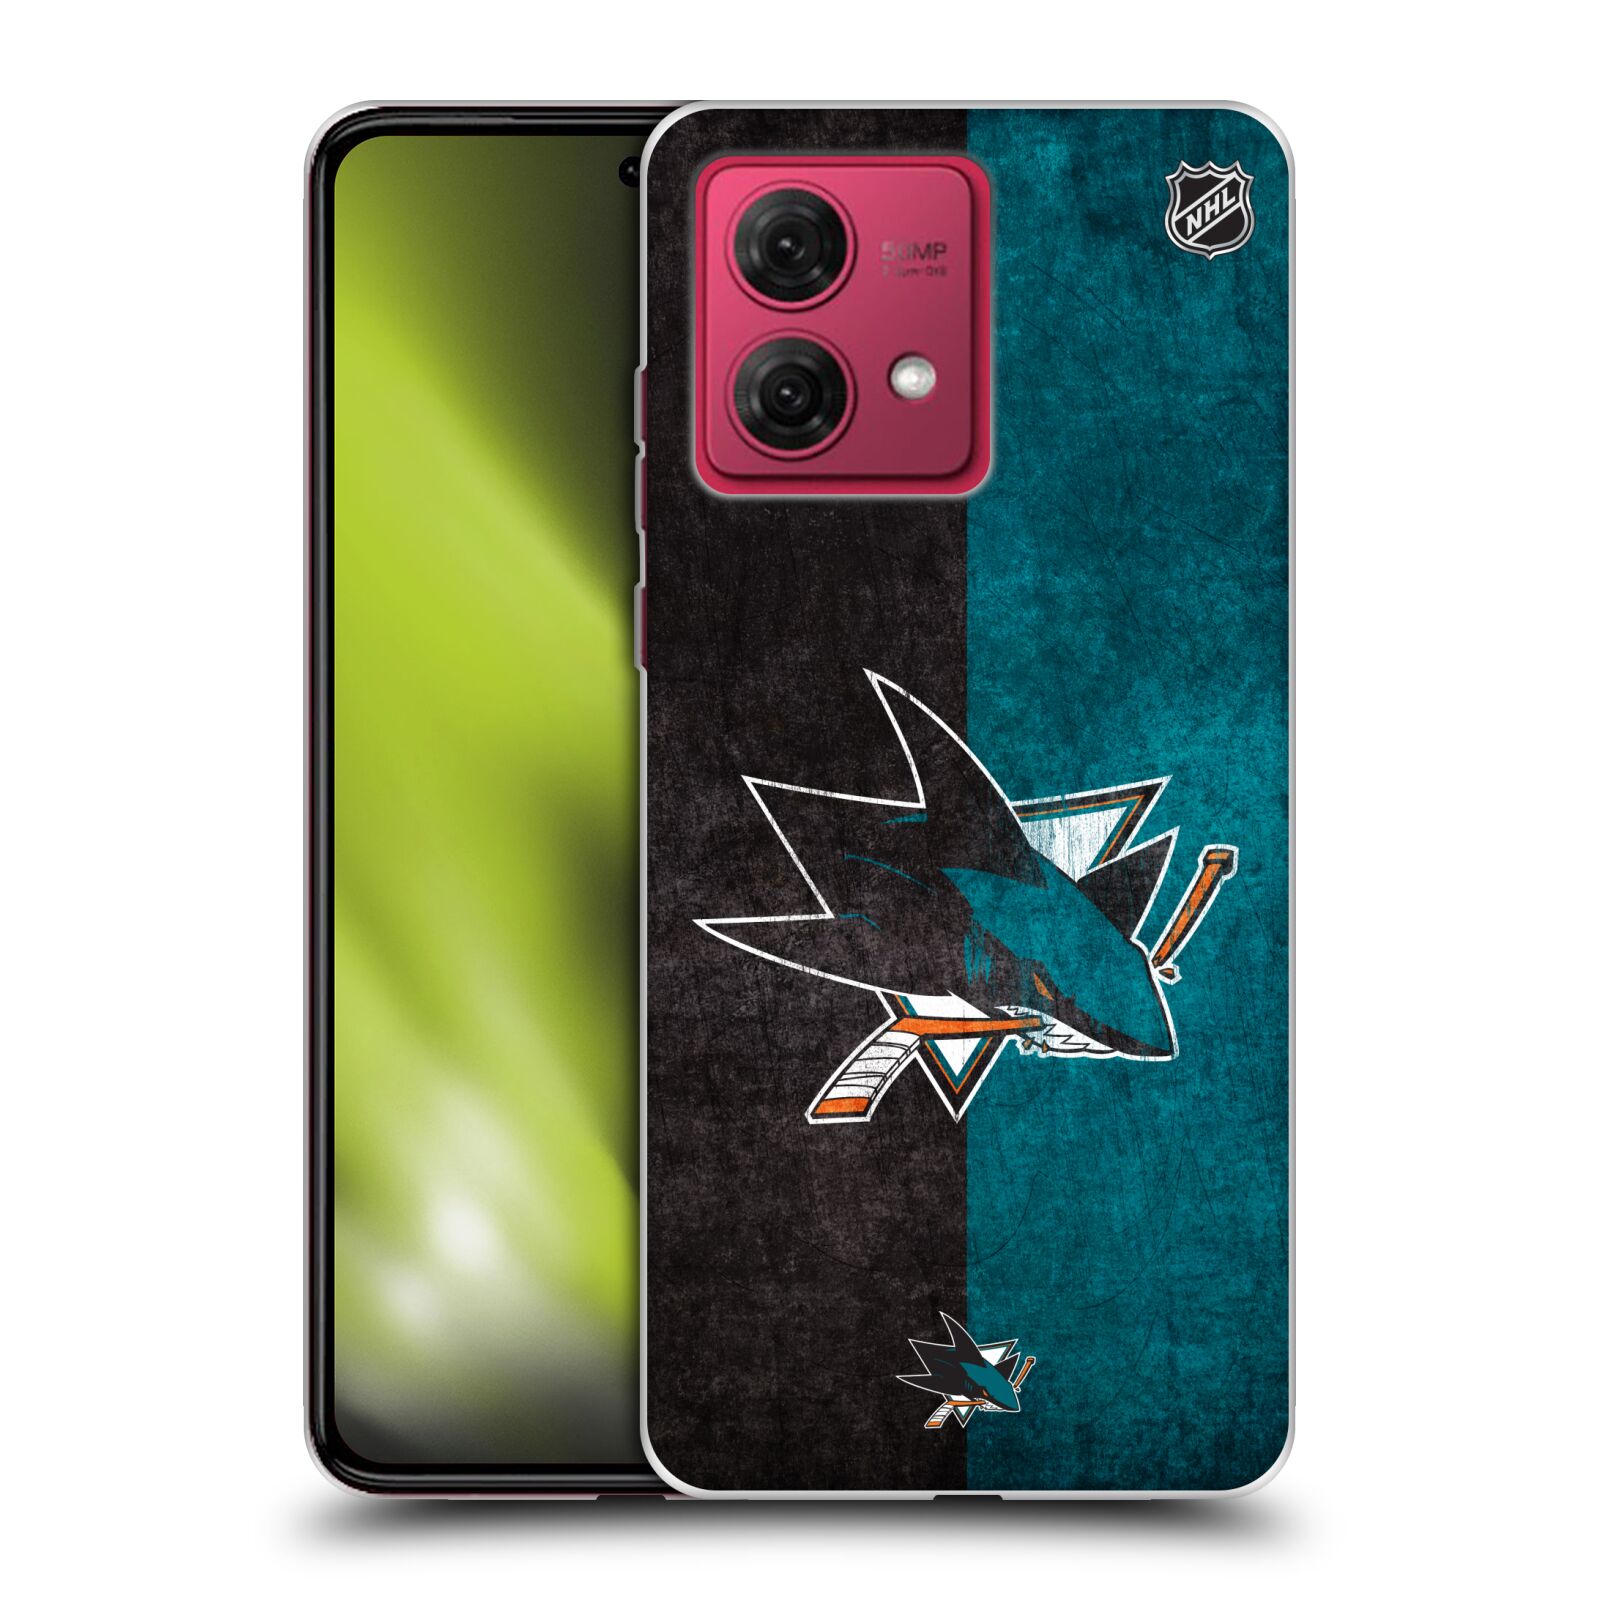 Silikonové pouzdro na mobil Motorola Moto G84 5G - NHL - Půlené logo San Jose Sharks (Silikonový kryt, obal, pouzdro na mobilní telefon Motorola Moto G84 5G s licencovaným motivem NHL - Půlené logo San Jose Sharks)